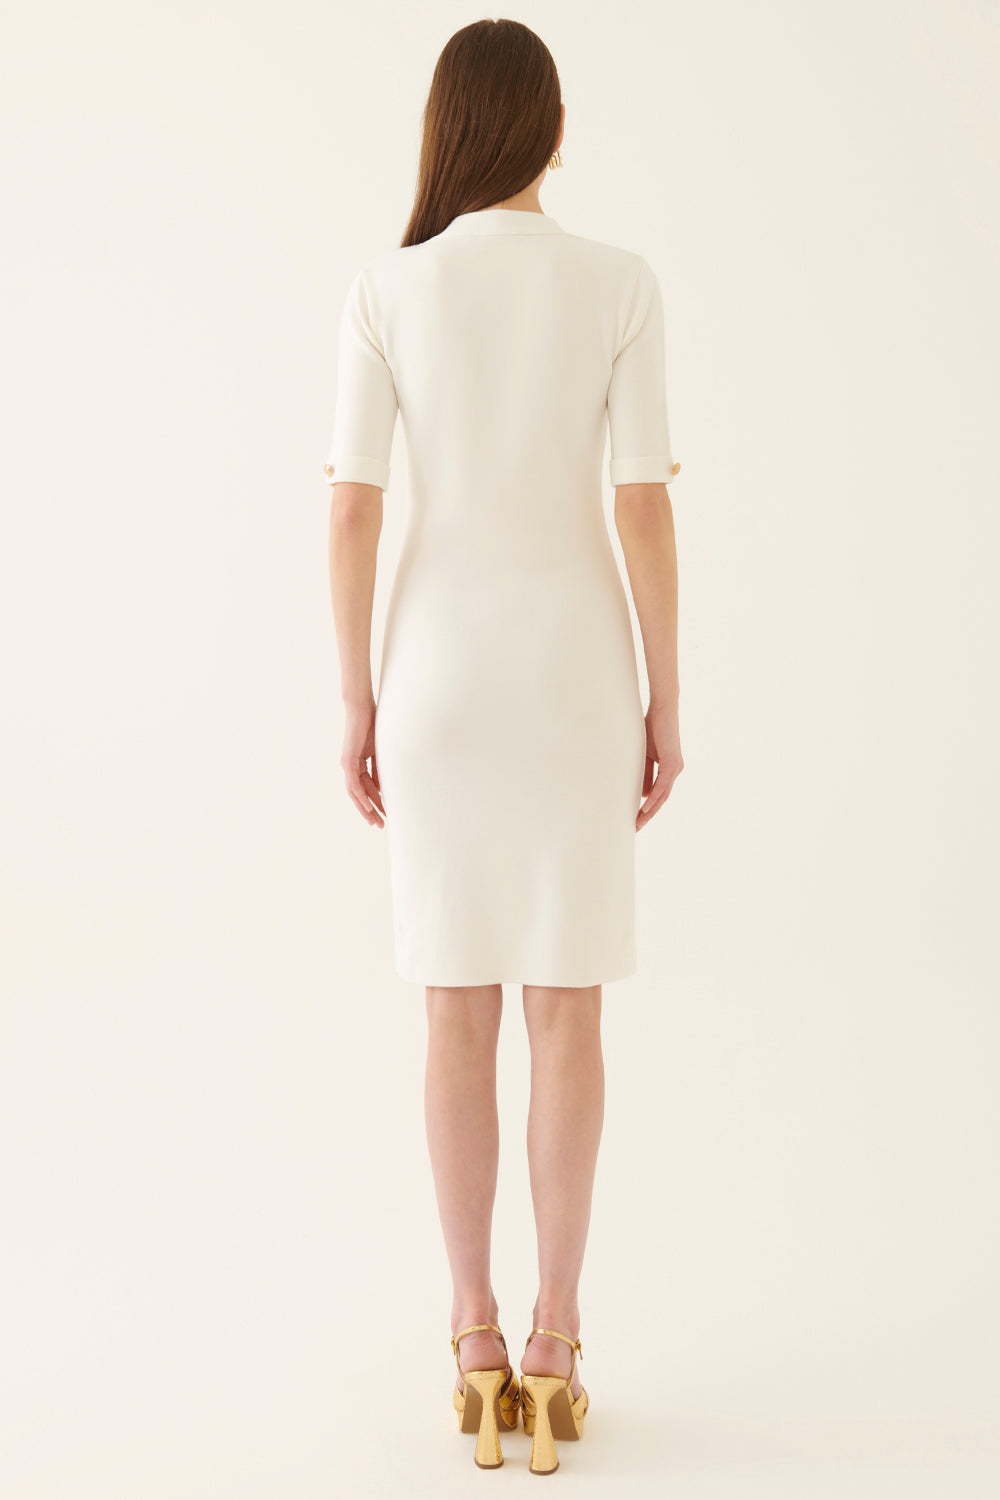 Илас бел џемпер фустан 0123